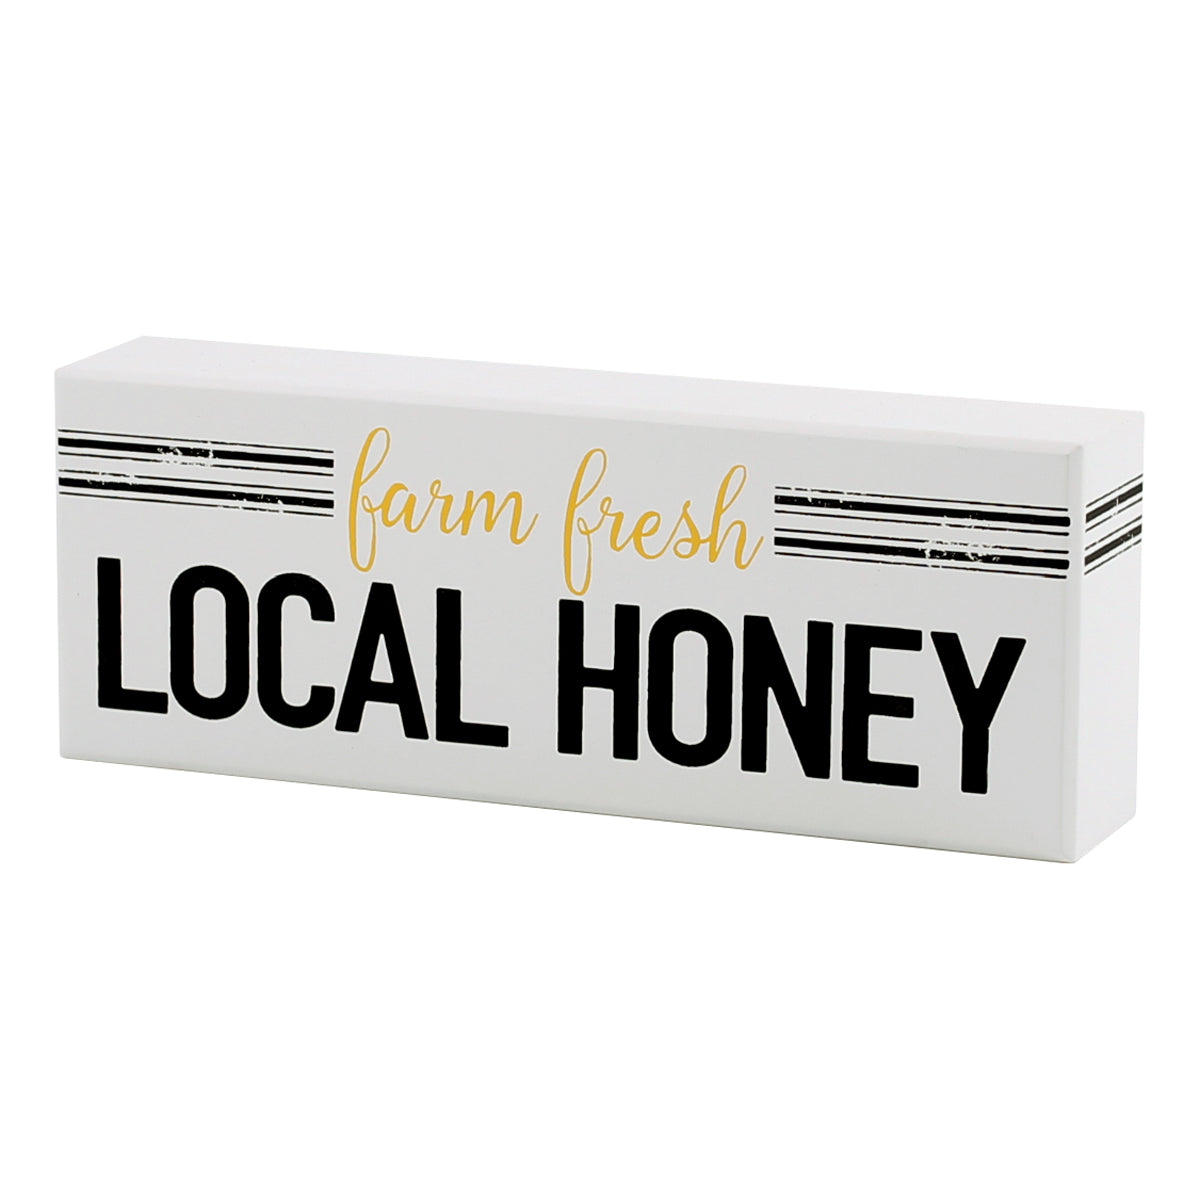 Local Honey Box Sign